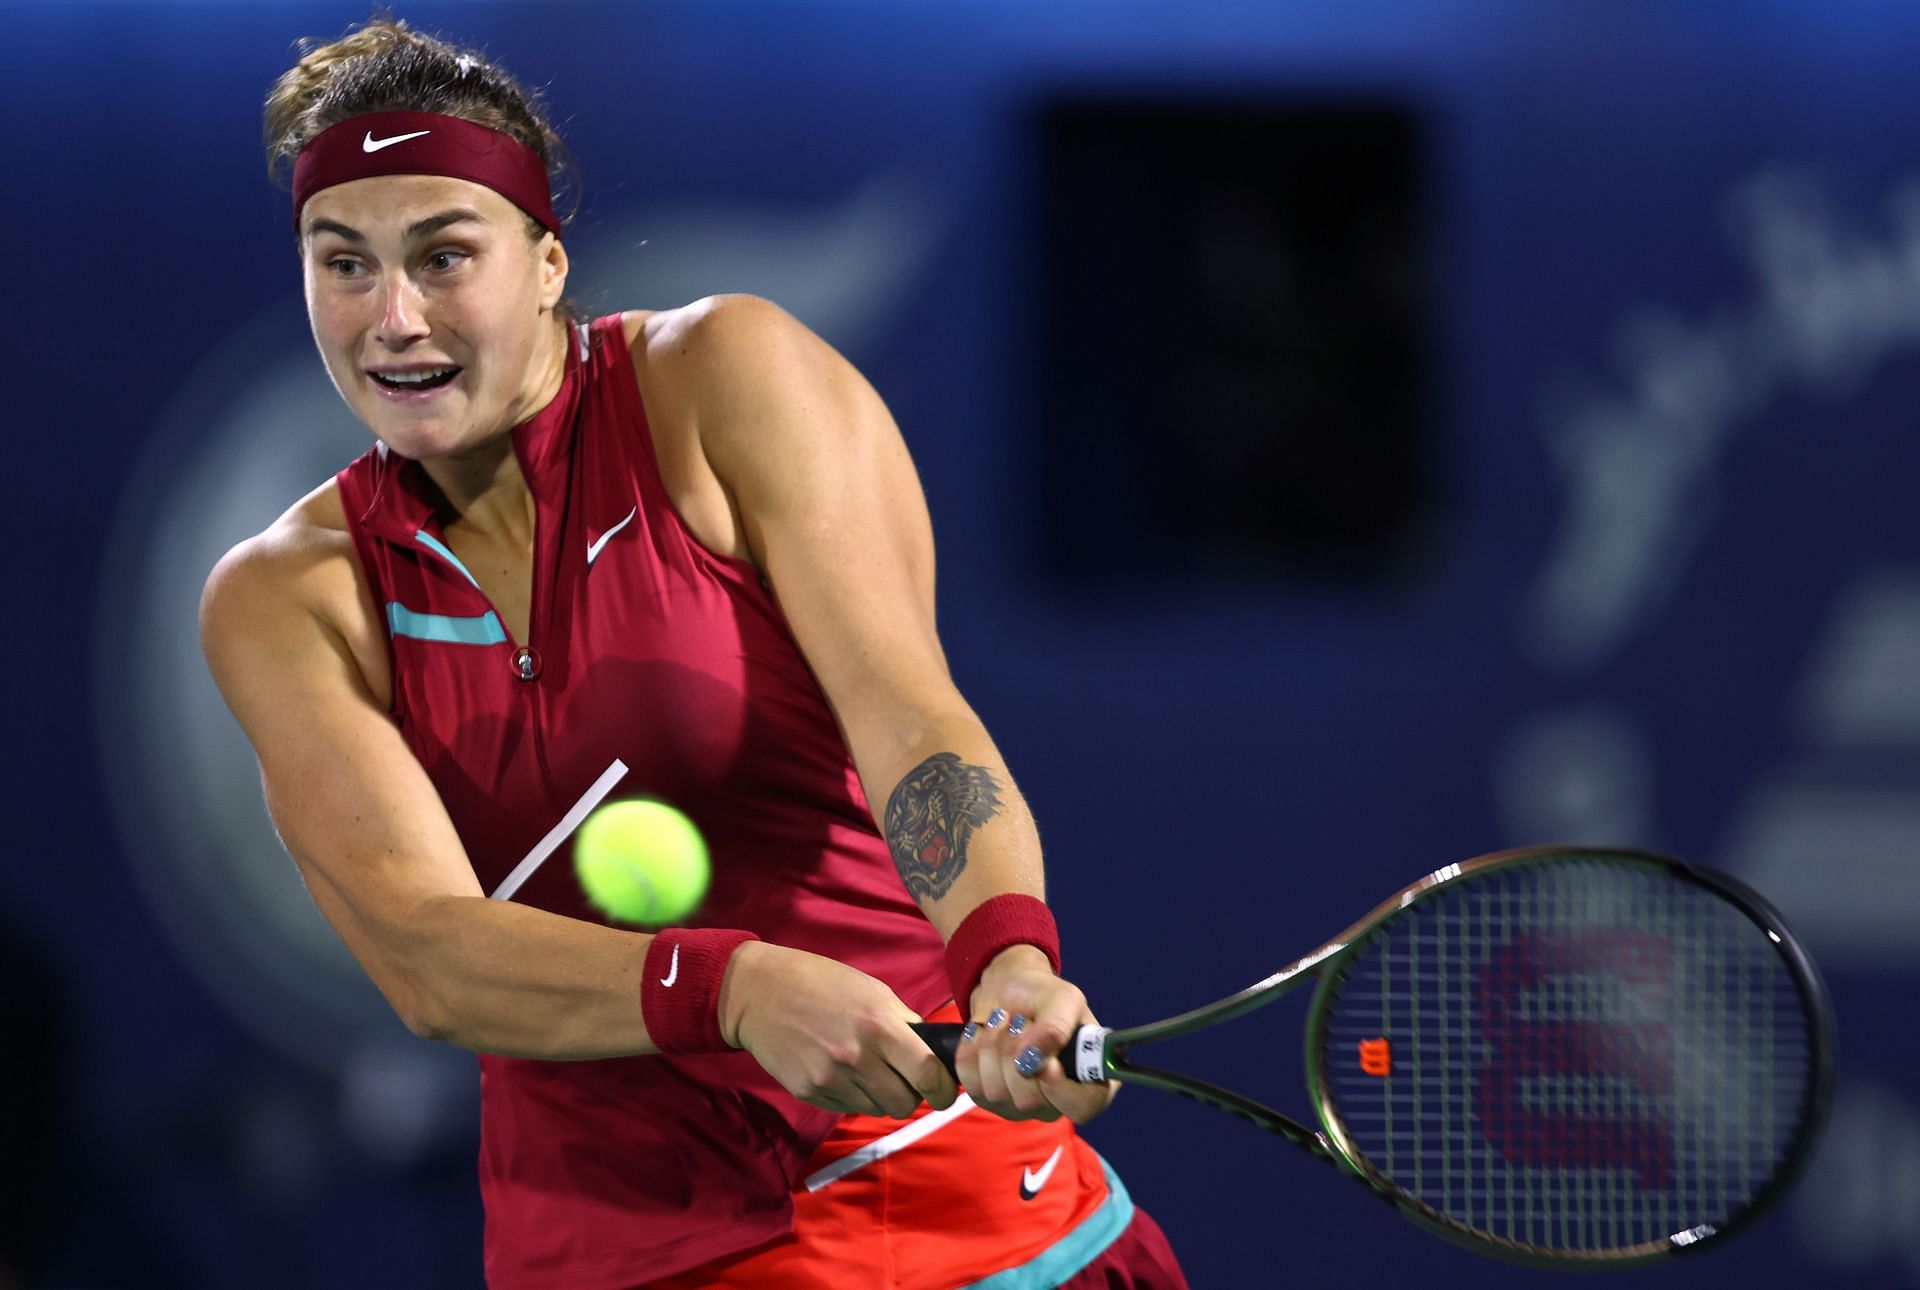 Aryna Sabalenka is the top seed at the Qatar Open